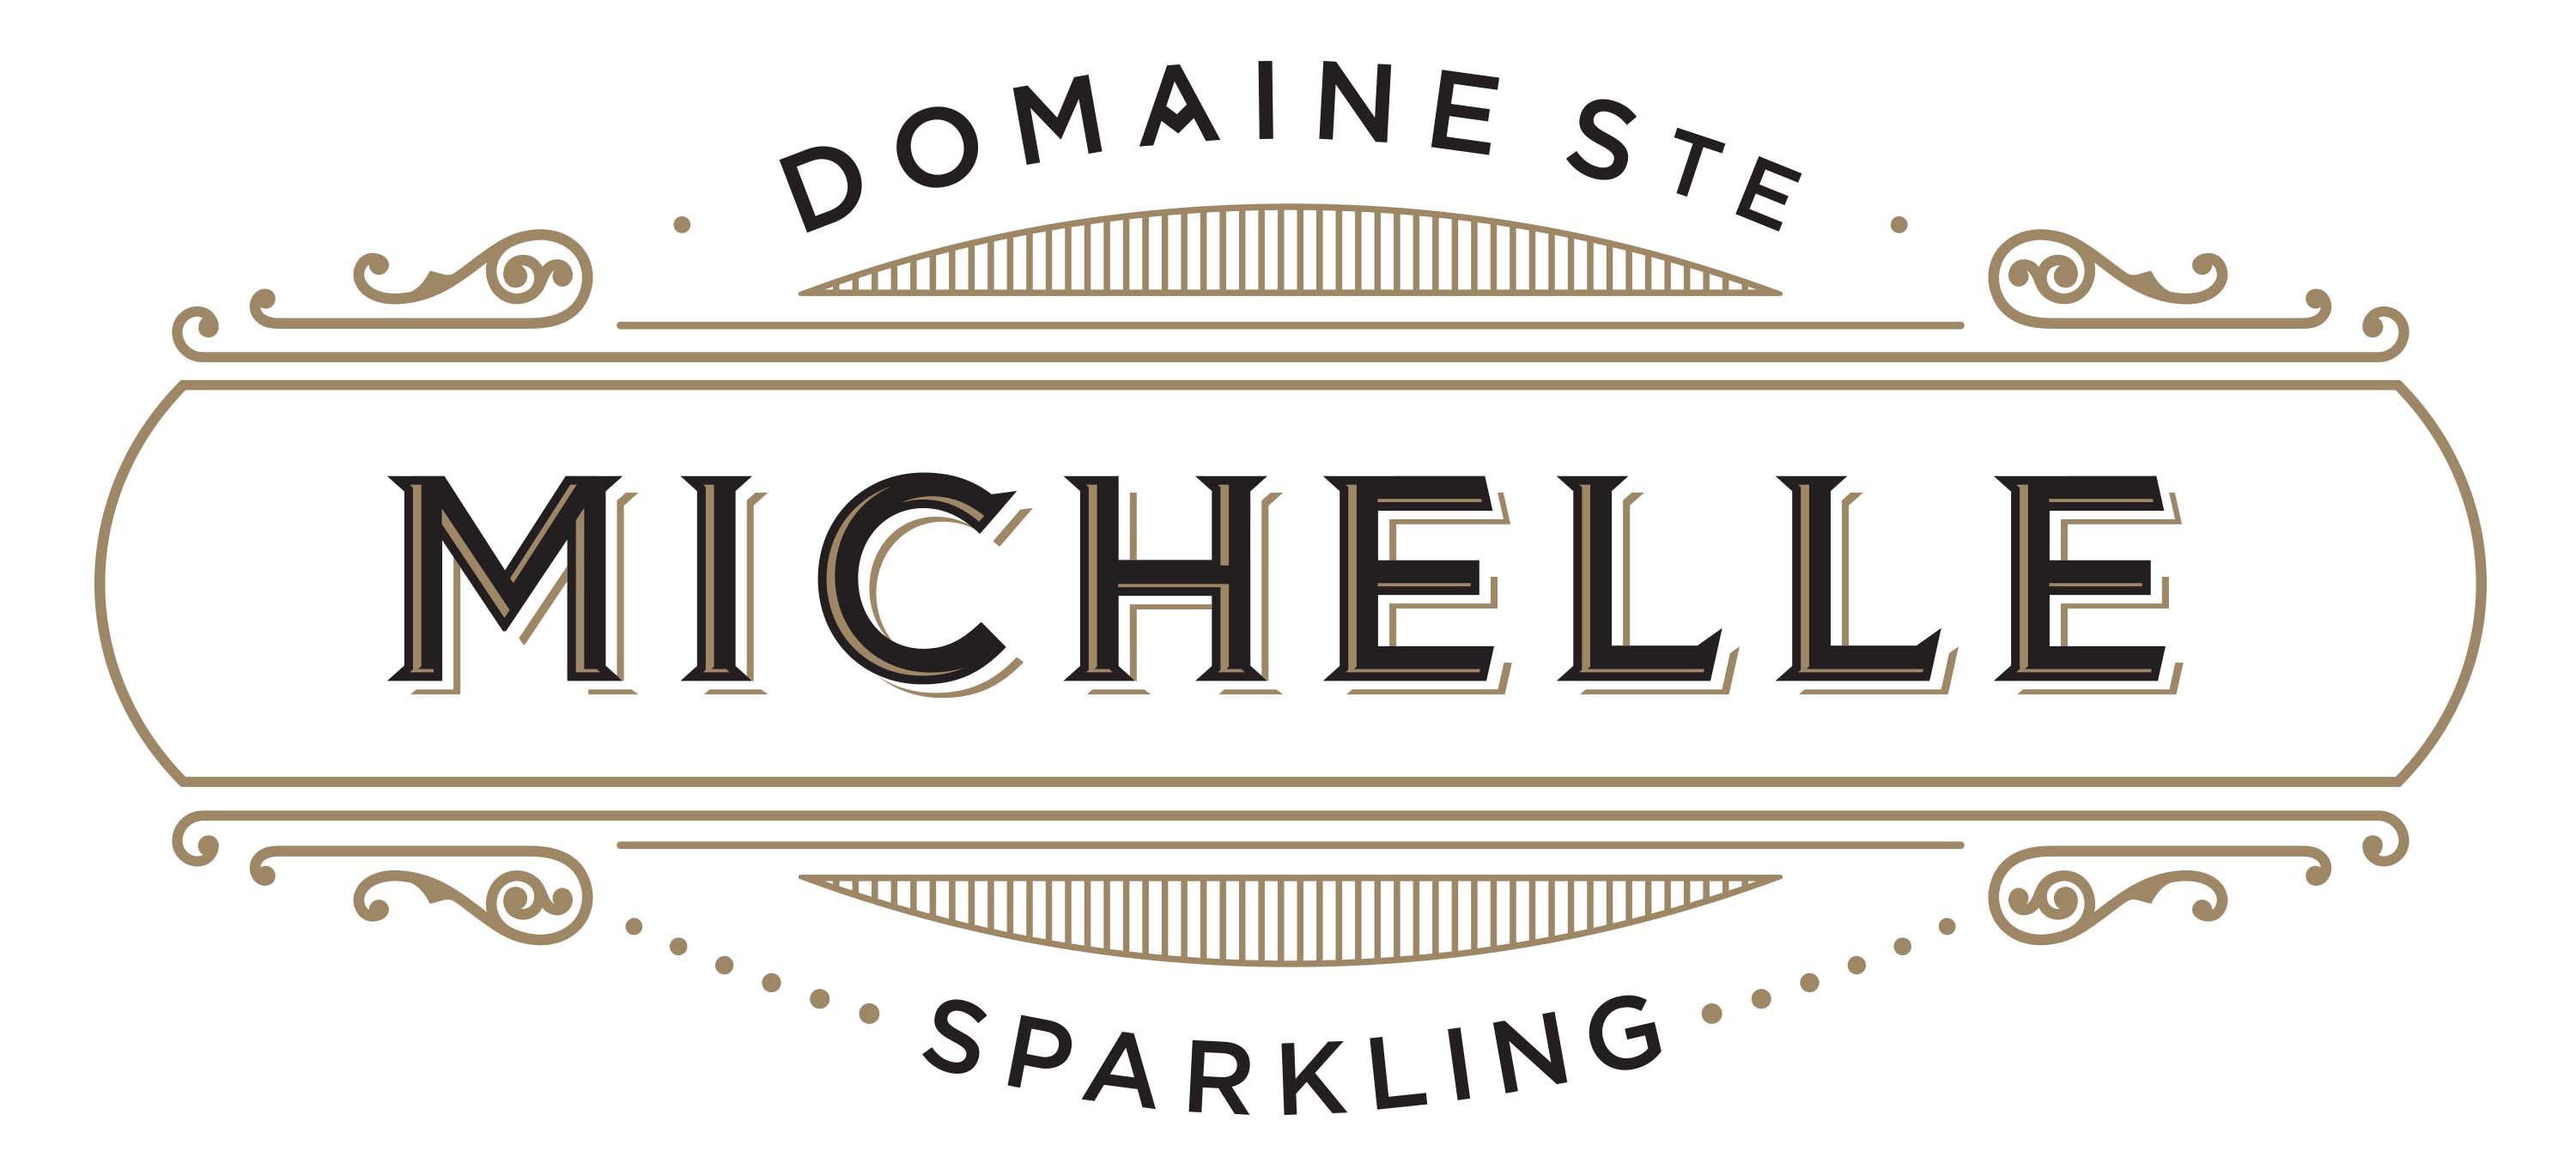 Michelle Logo - Domaine Ste. Michelle Media Kit